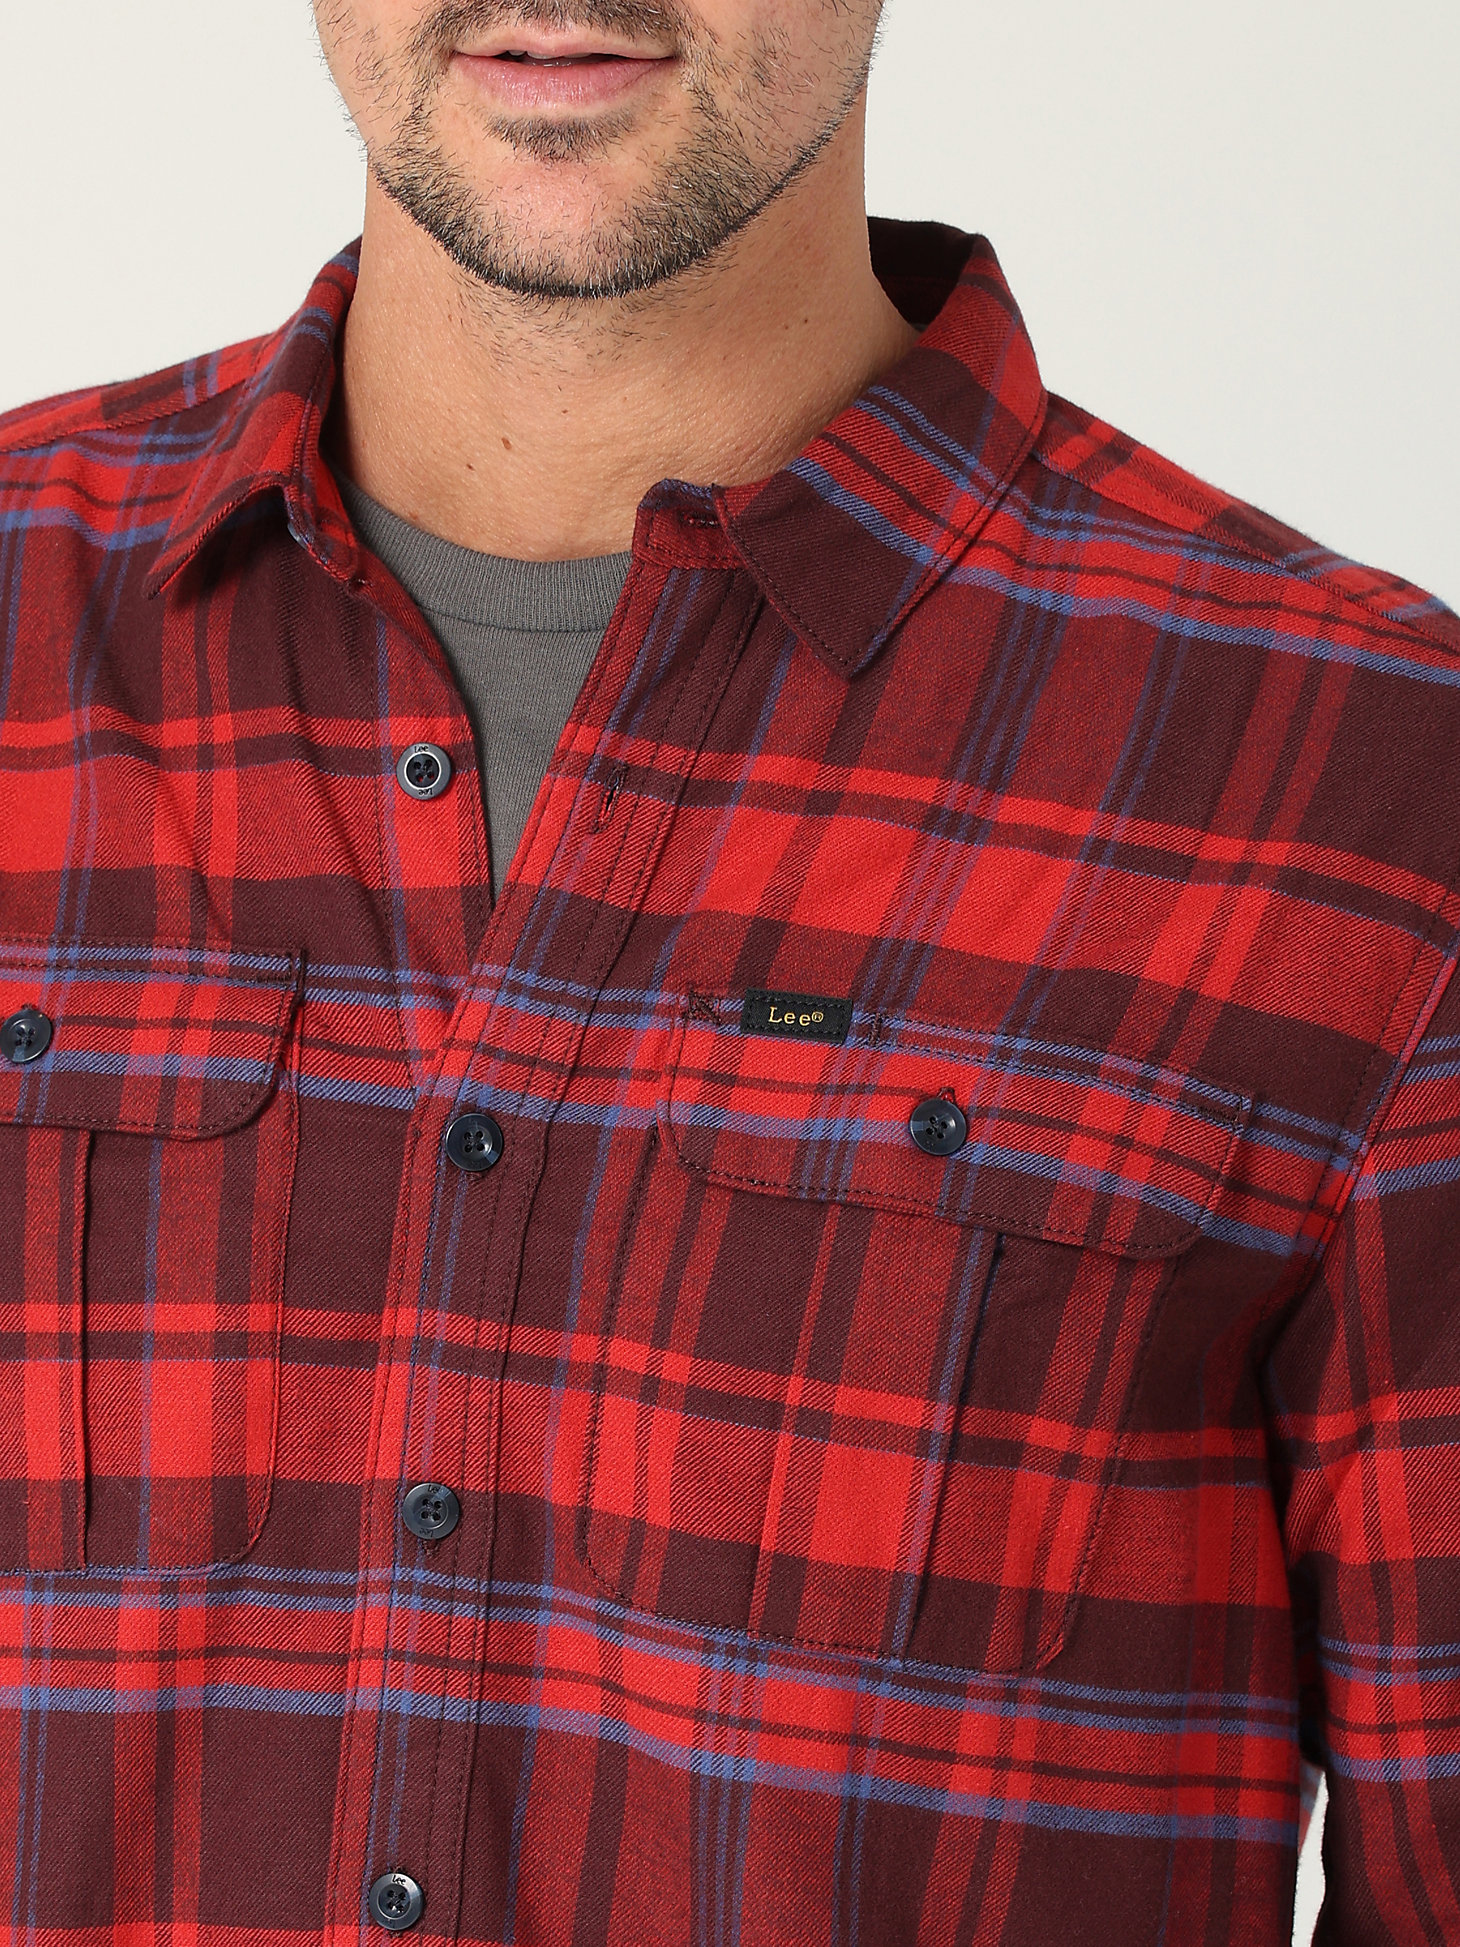 Men's Working West Flannel Plaid Button Down Shirt in Sumac Plaid alternative view 2